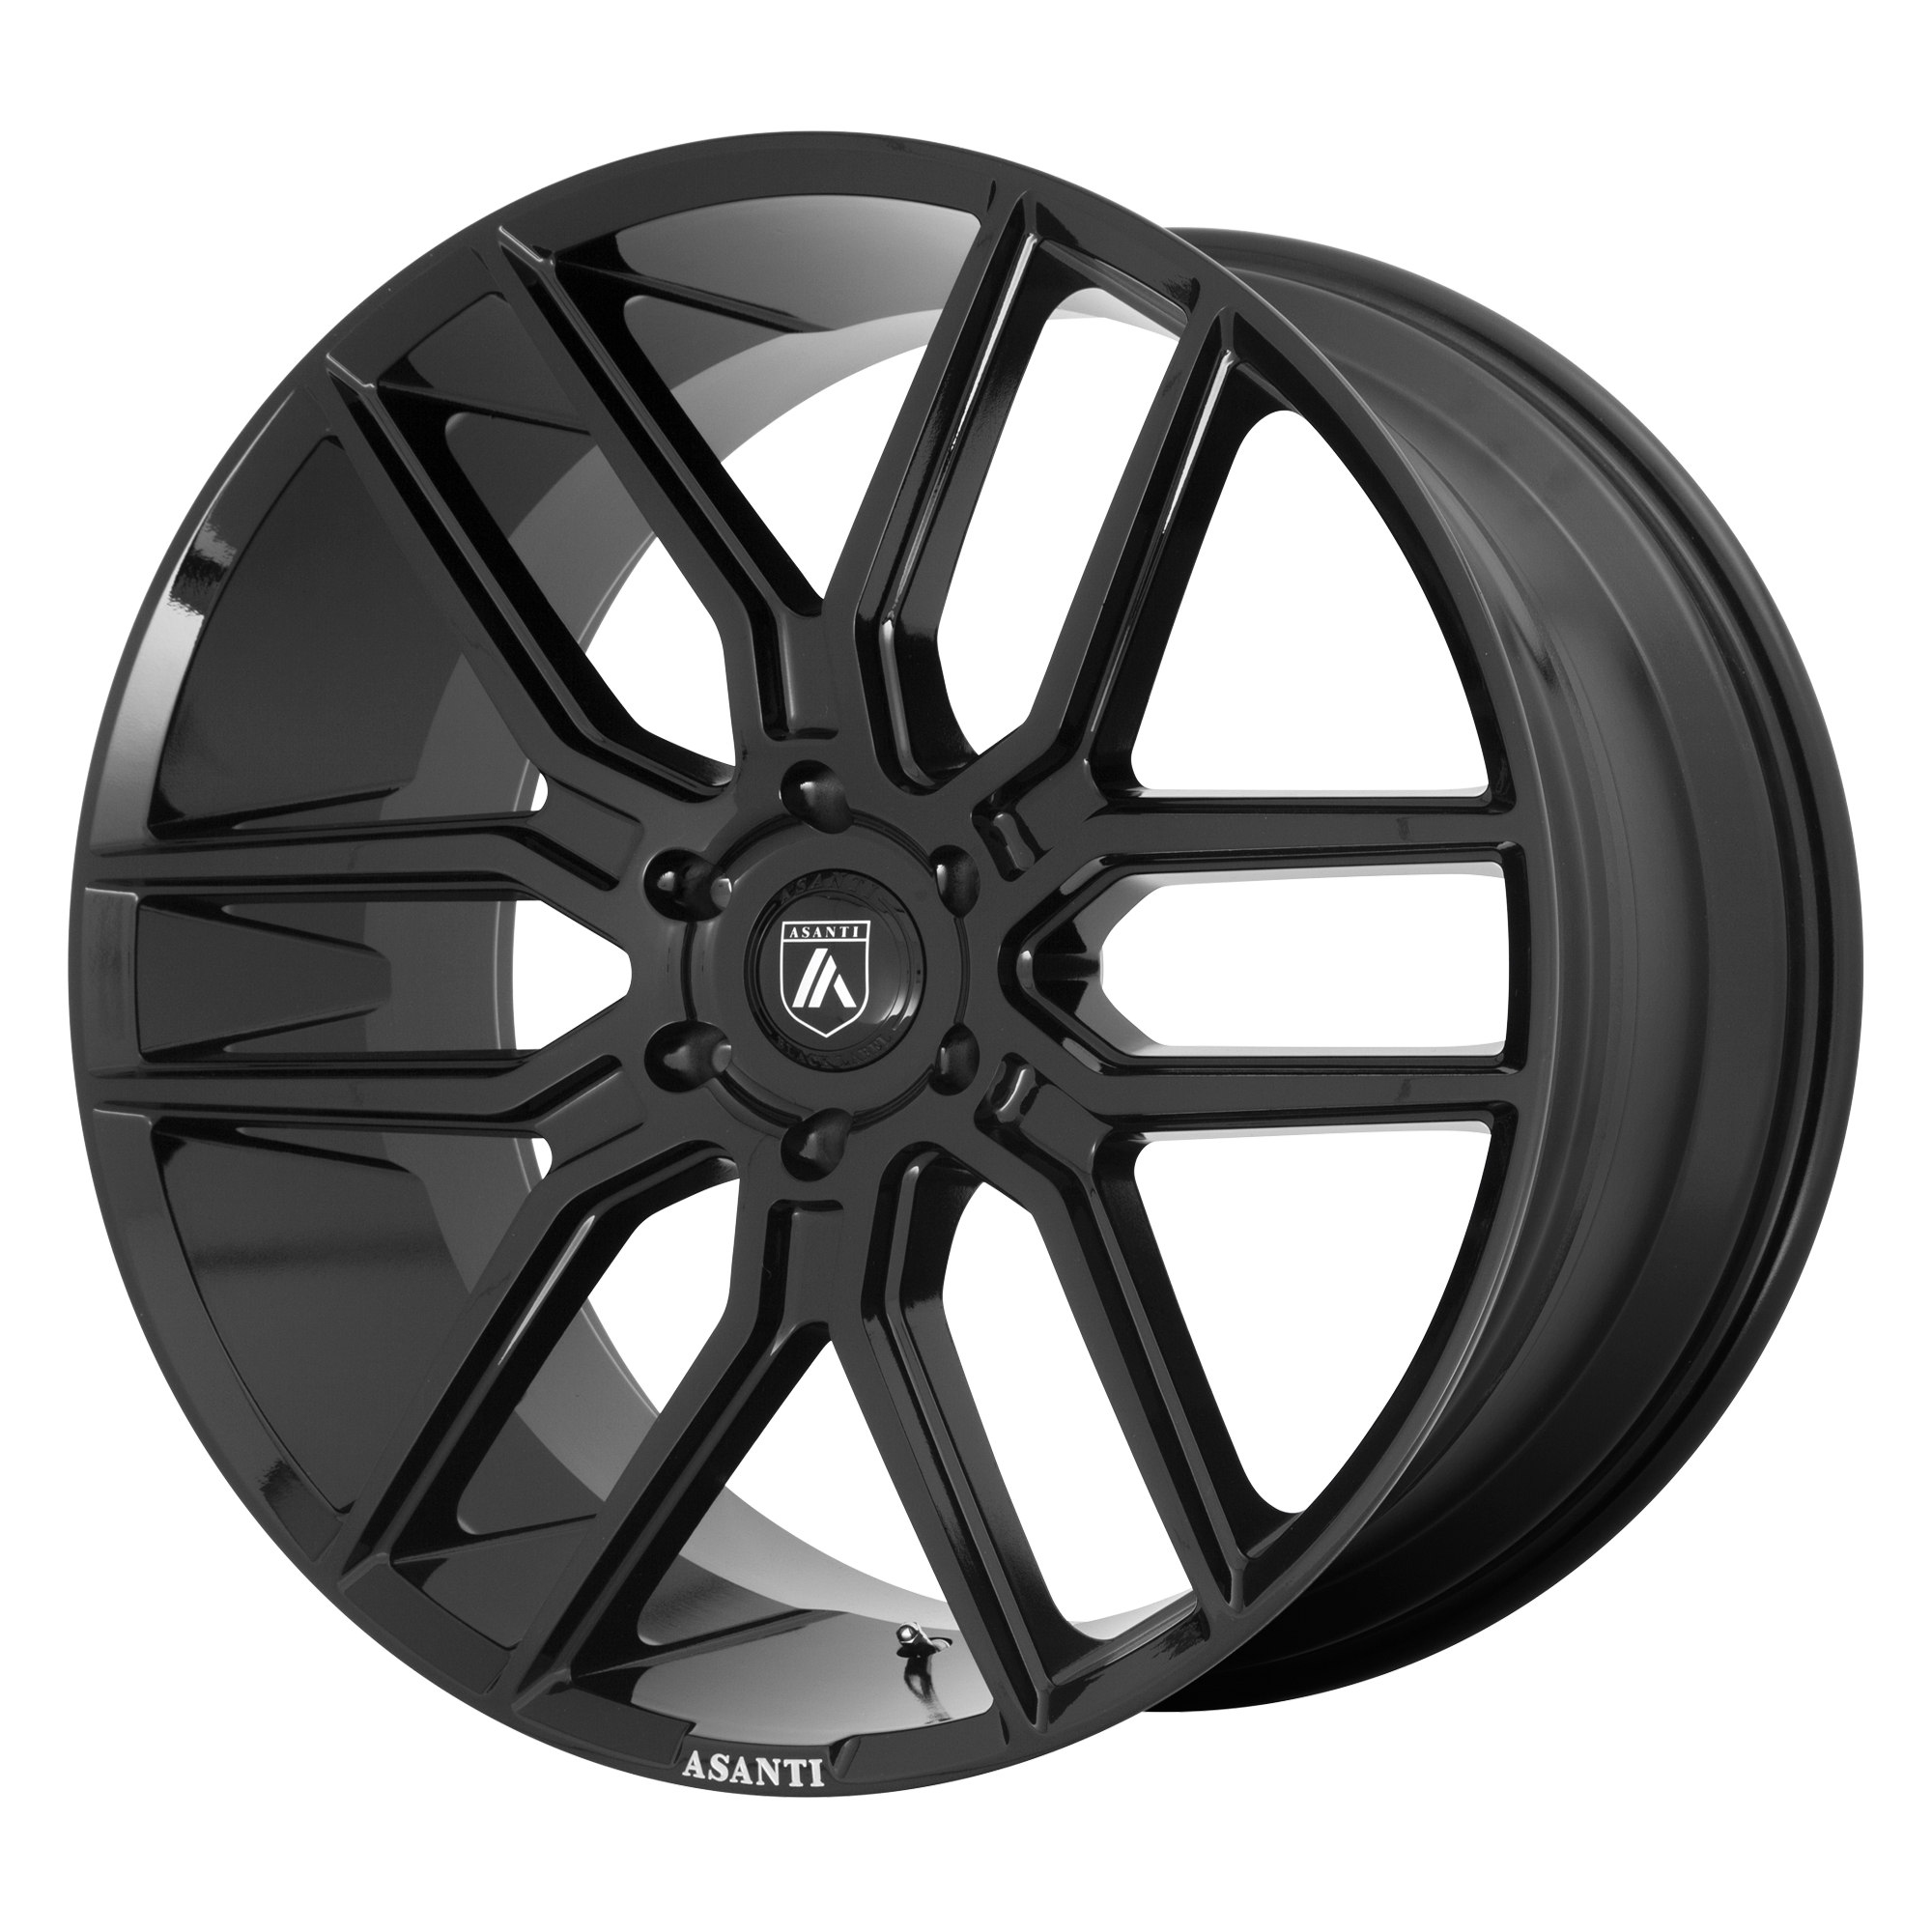 BARON 22x9.5 6x139.70 GLOSS BLACK (15 mm) - Tires and Engine Performance